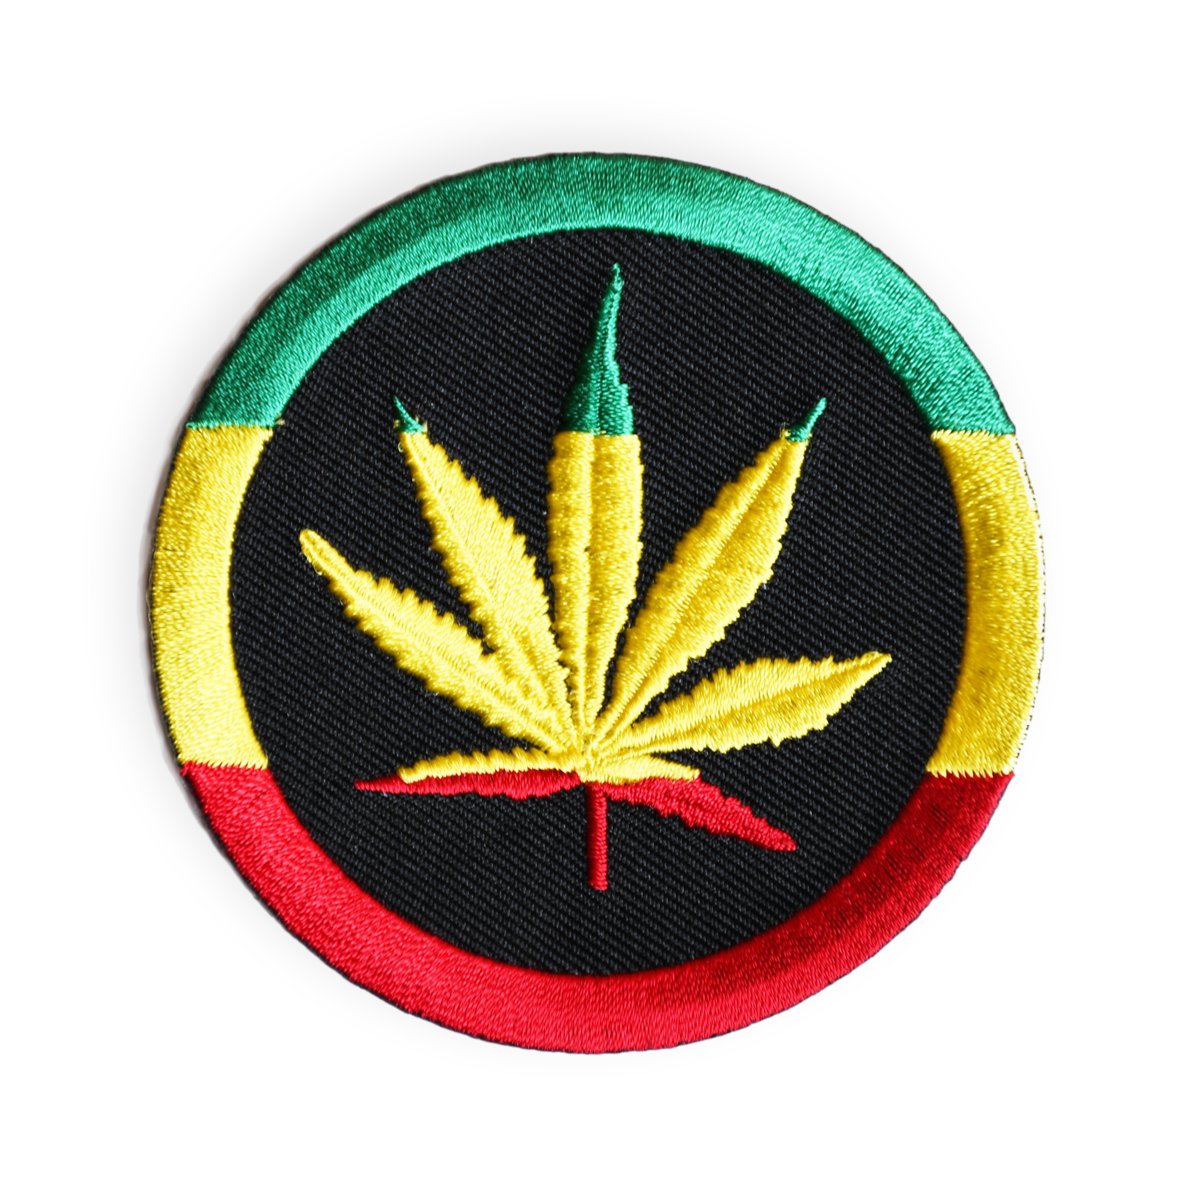 Rasta Marijuana Leaf Circle Patch